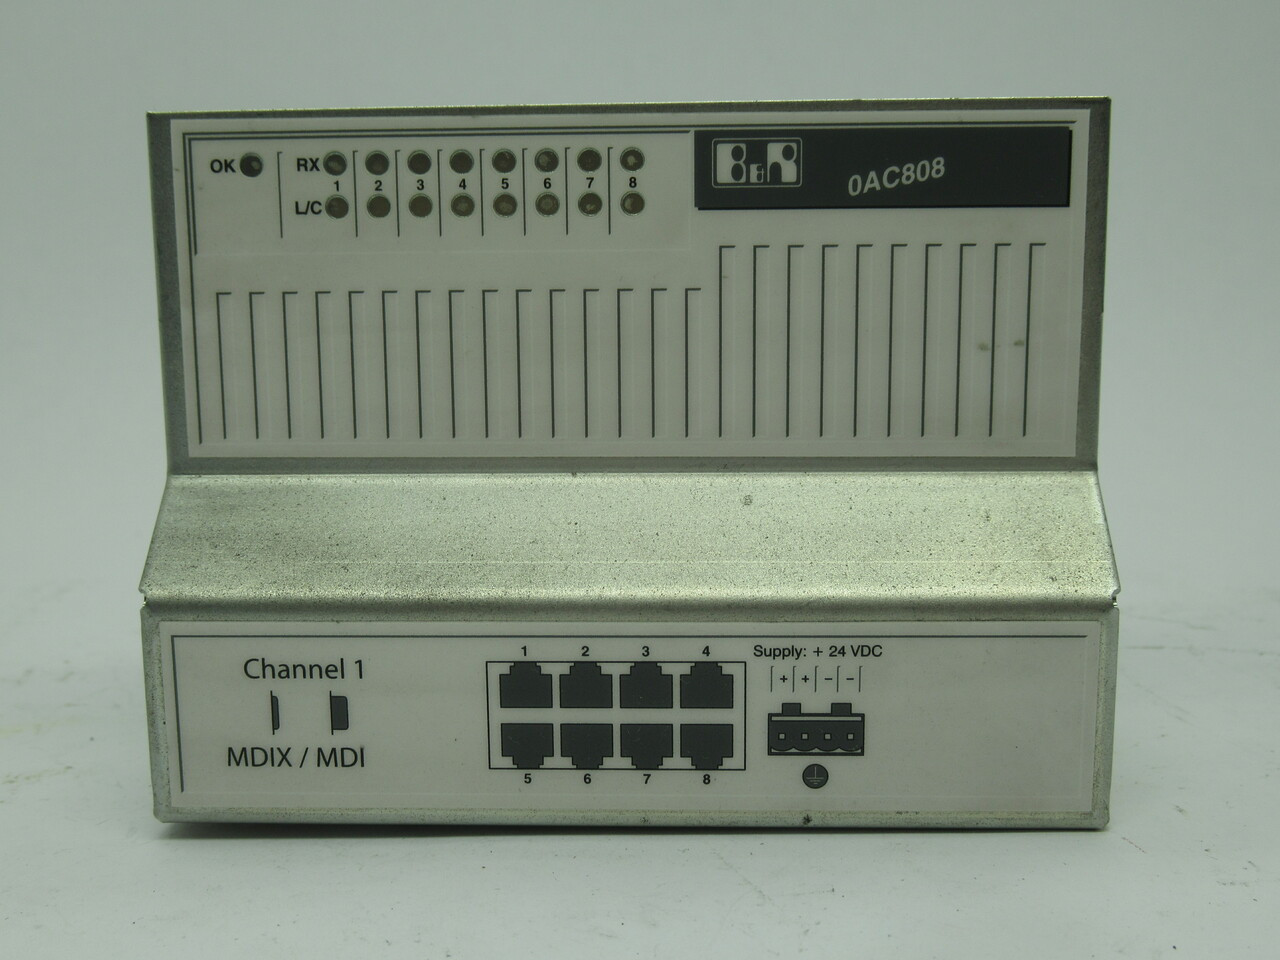 B&R 0AC808.9 Ethernet Hub Rev. C0 8Port 24VDC USED